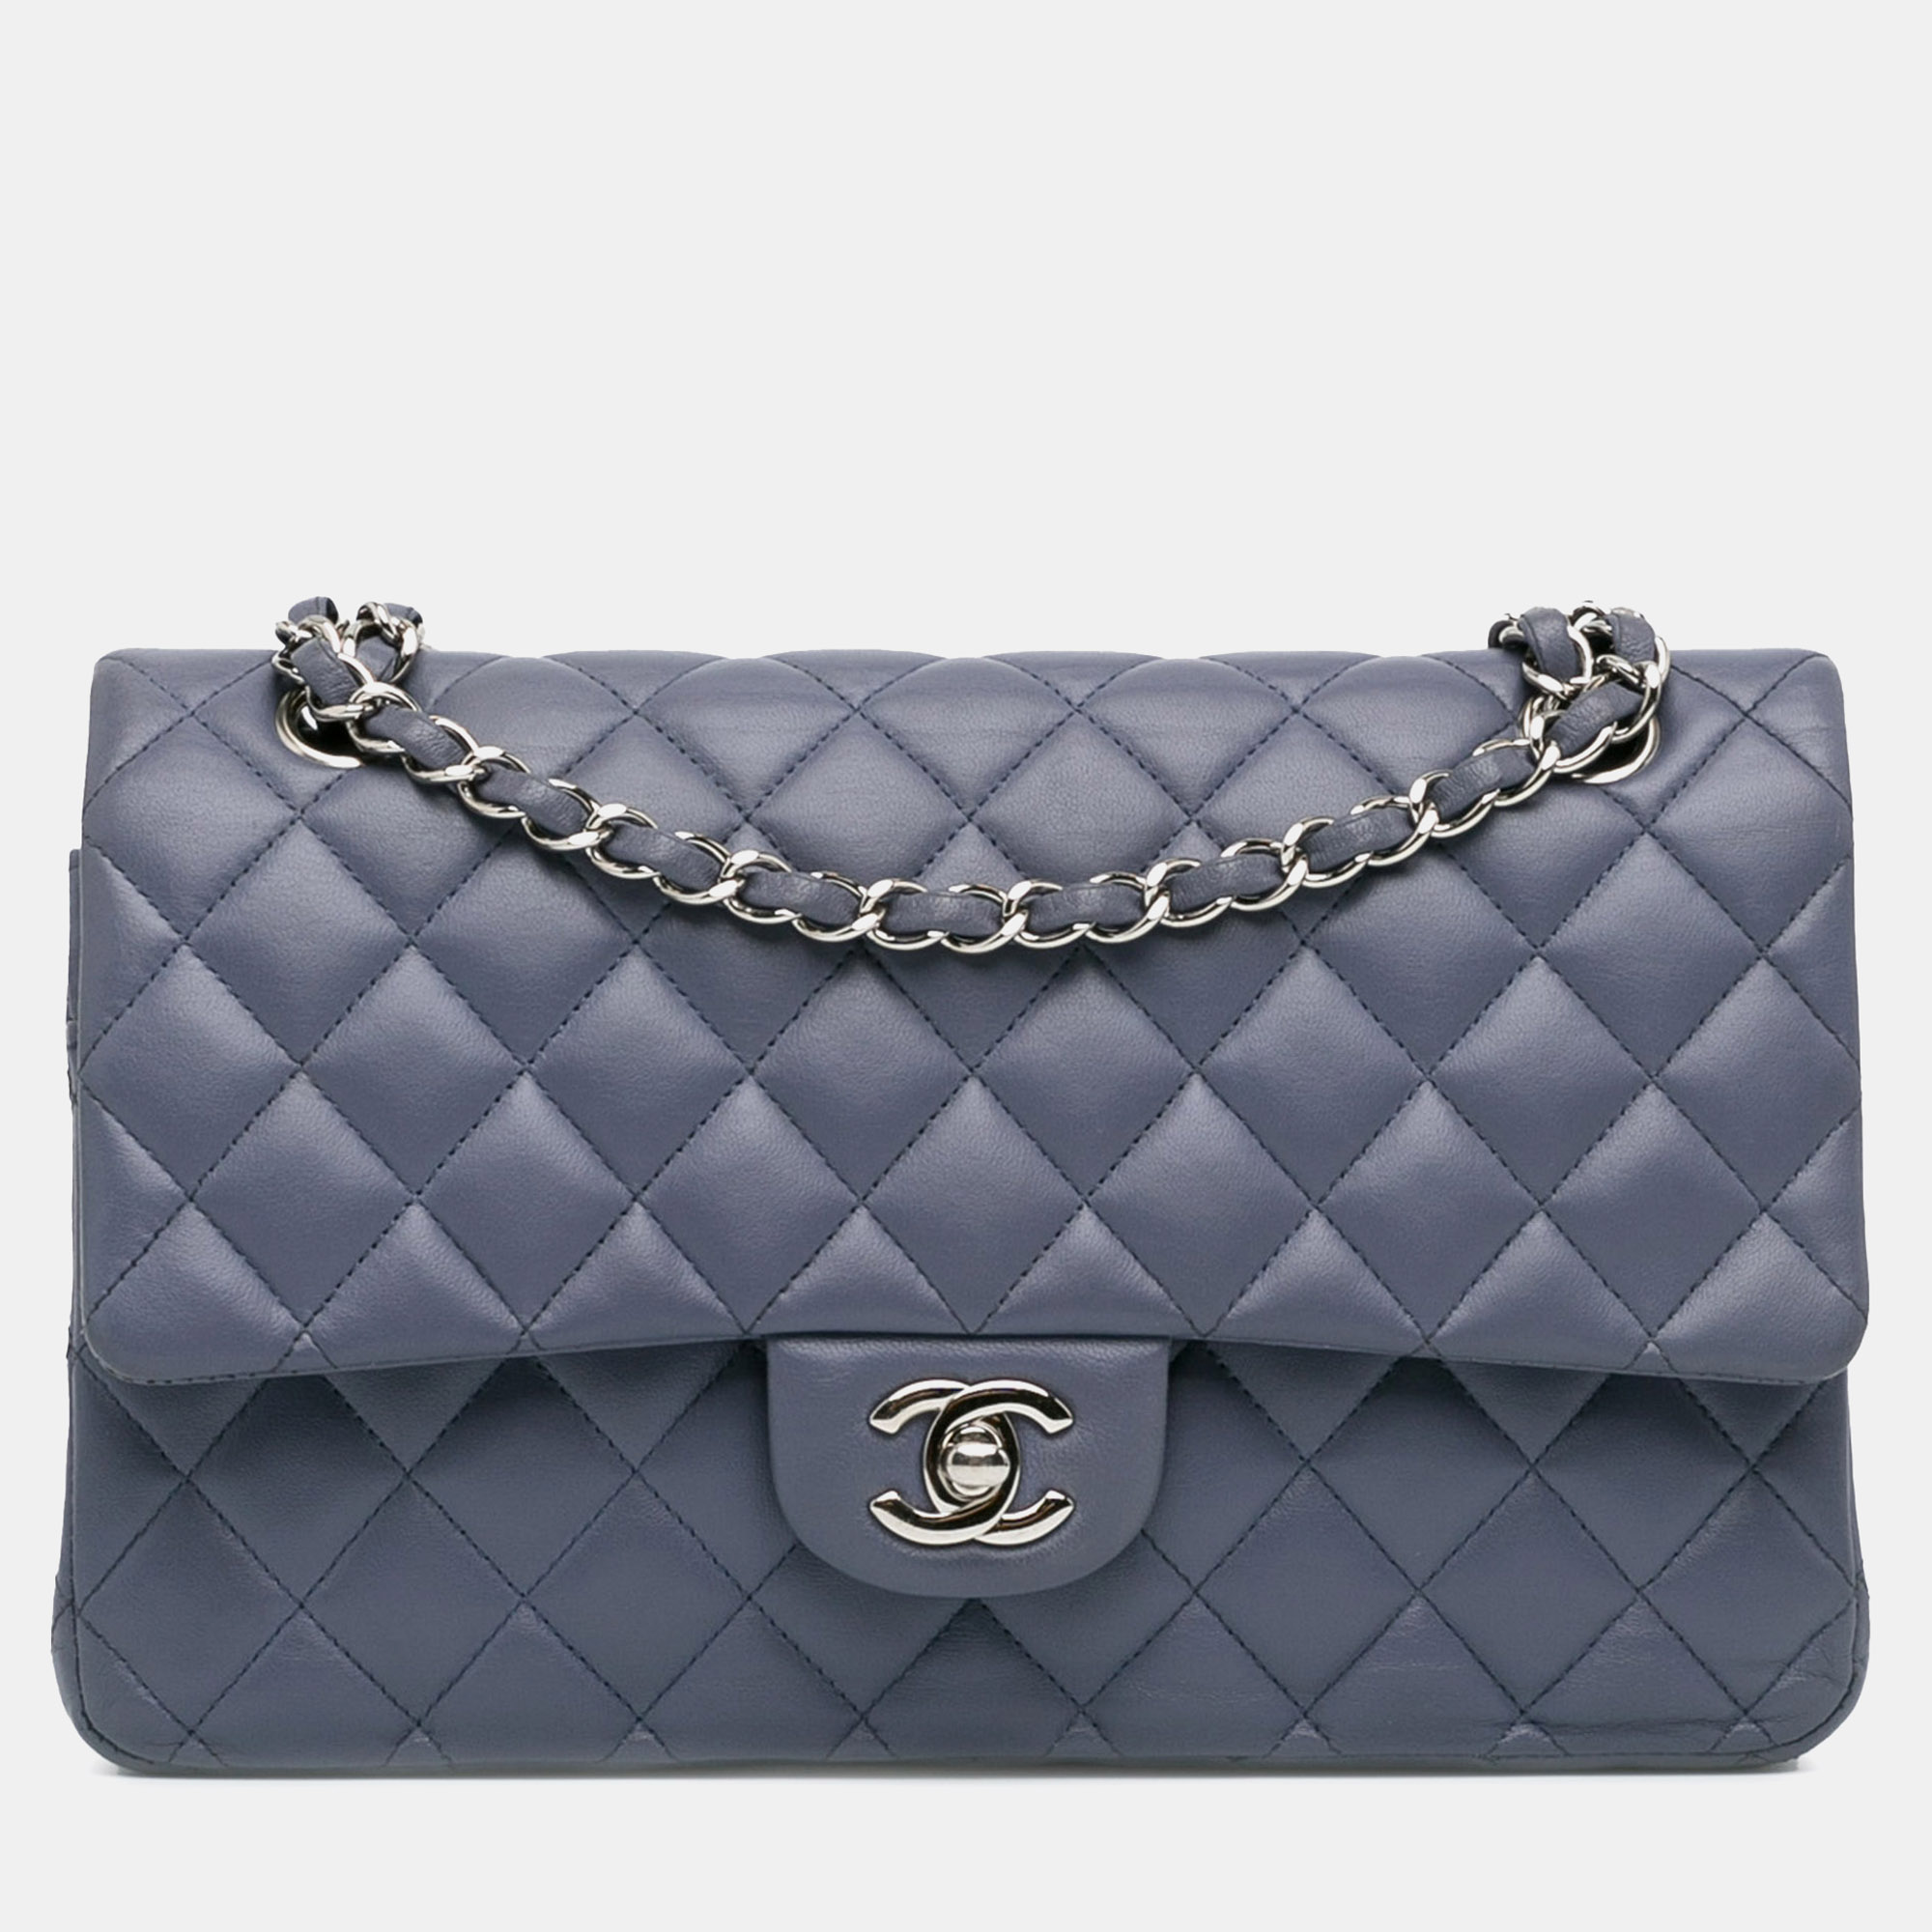 Chanel medium classic lambskin double flap bag